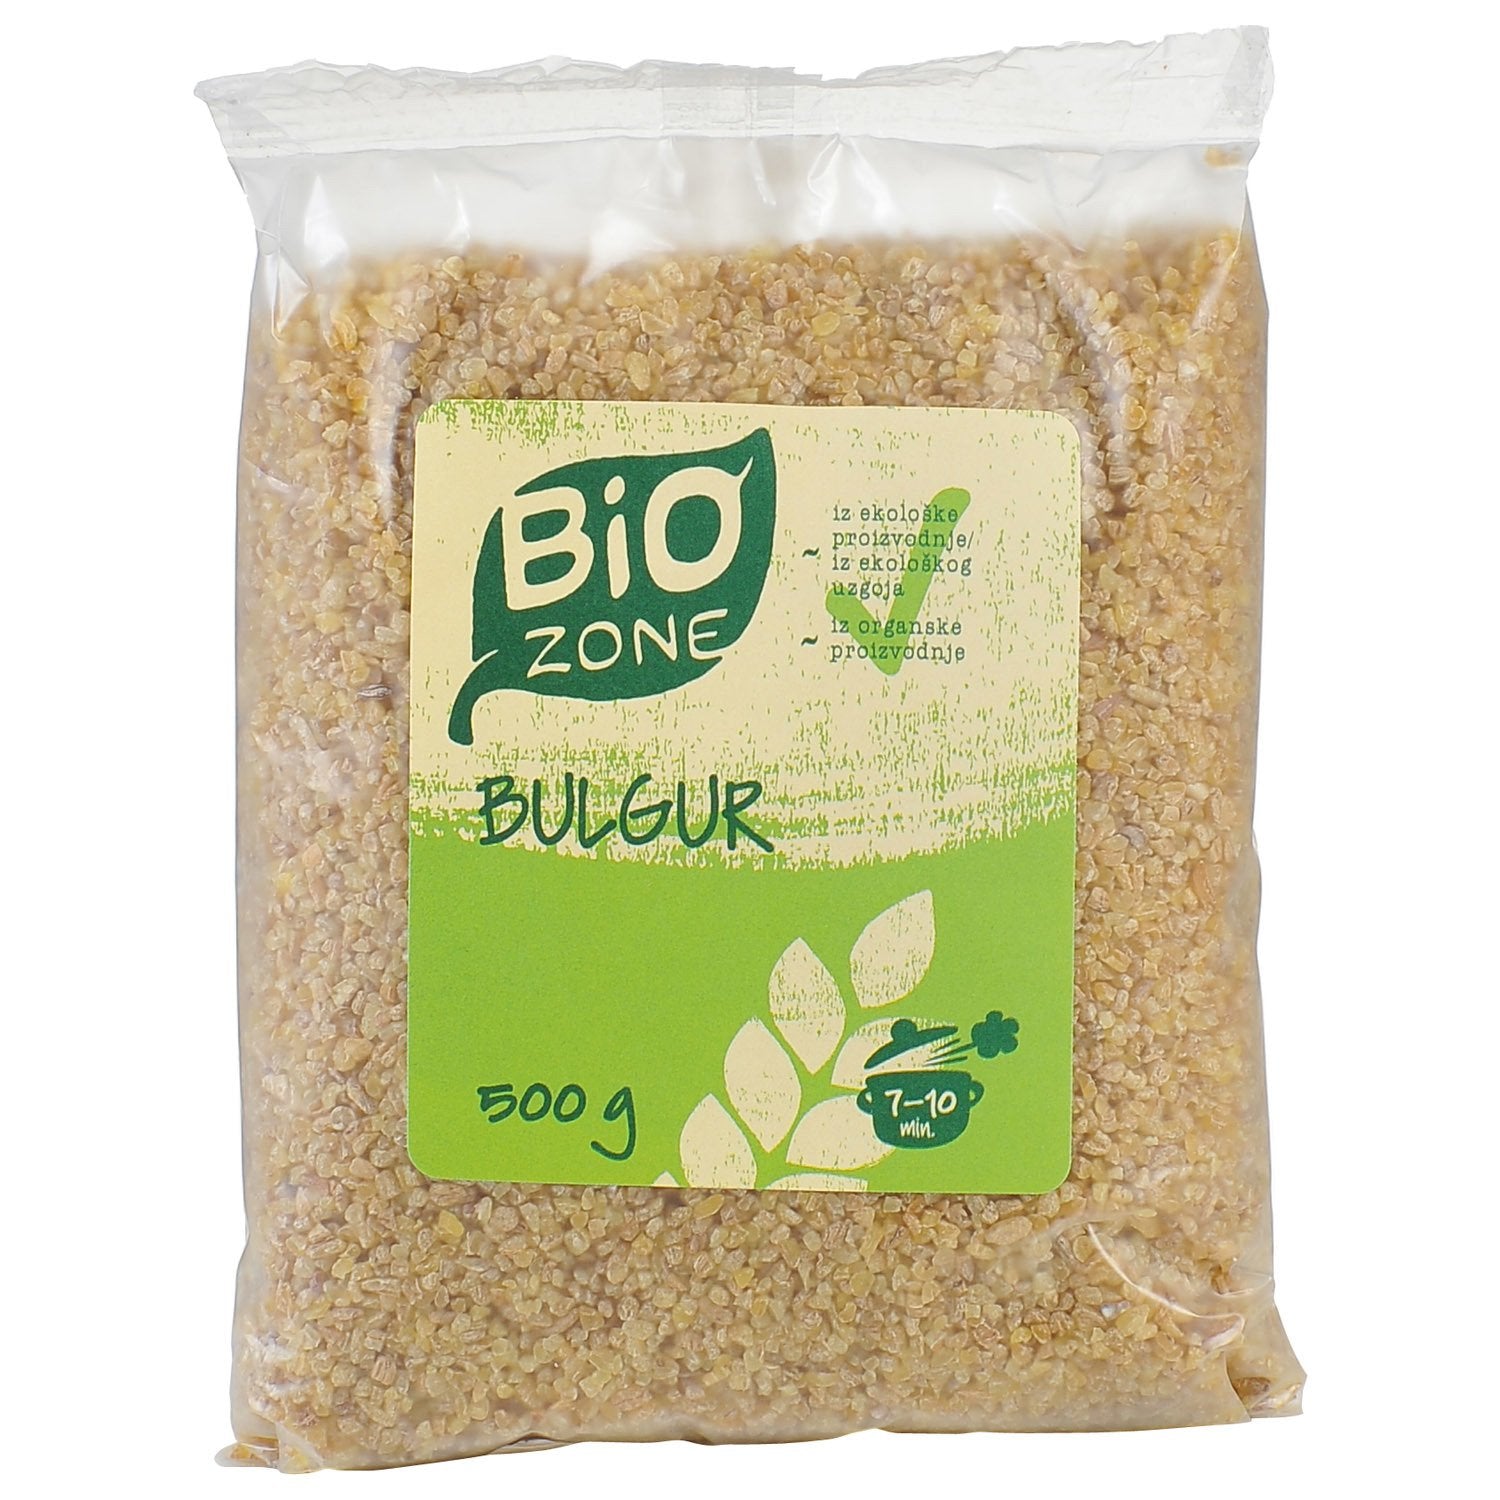 aga>Bulghur 500g Bio Zone